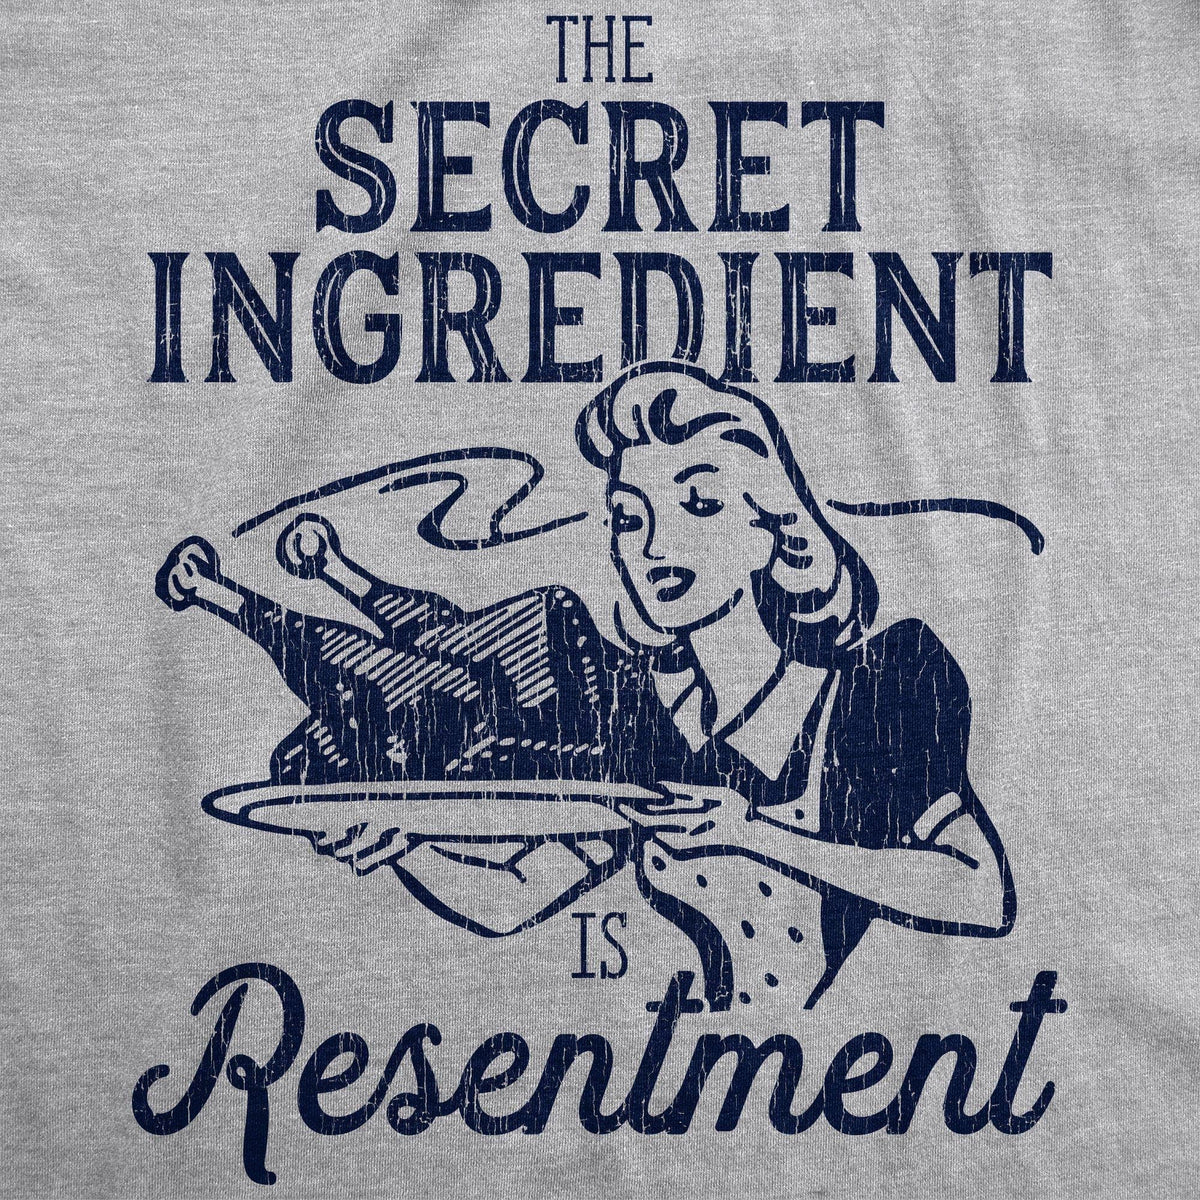 The Secret Ingredient Is Resentment Men&#39;s Tshirt - Crazy Dog T-Shirts